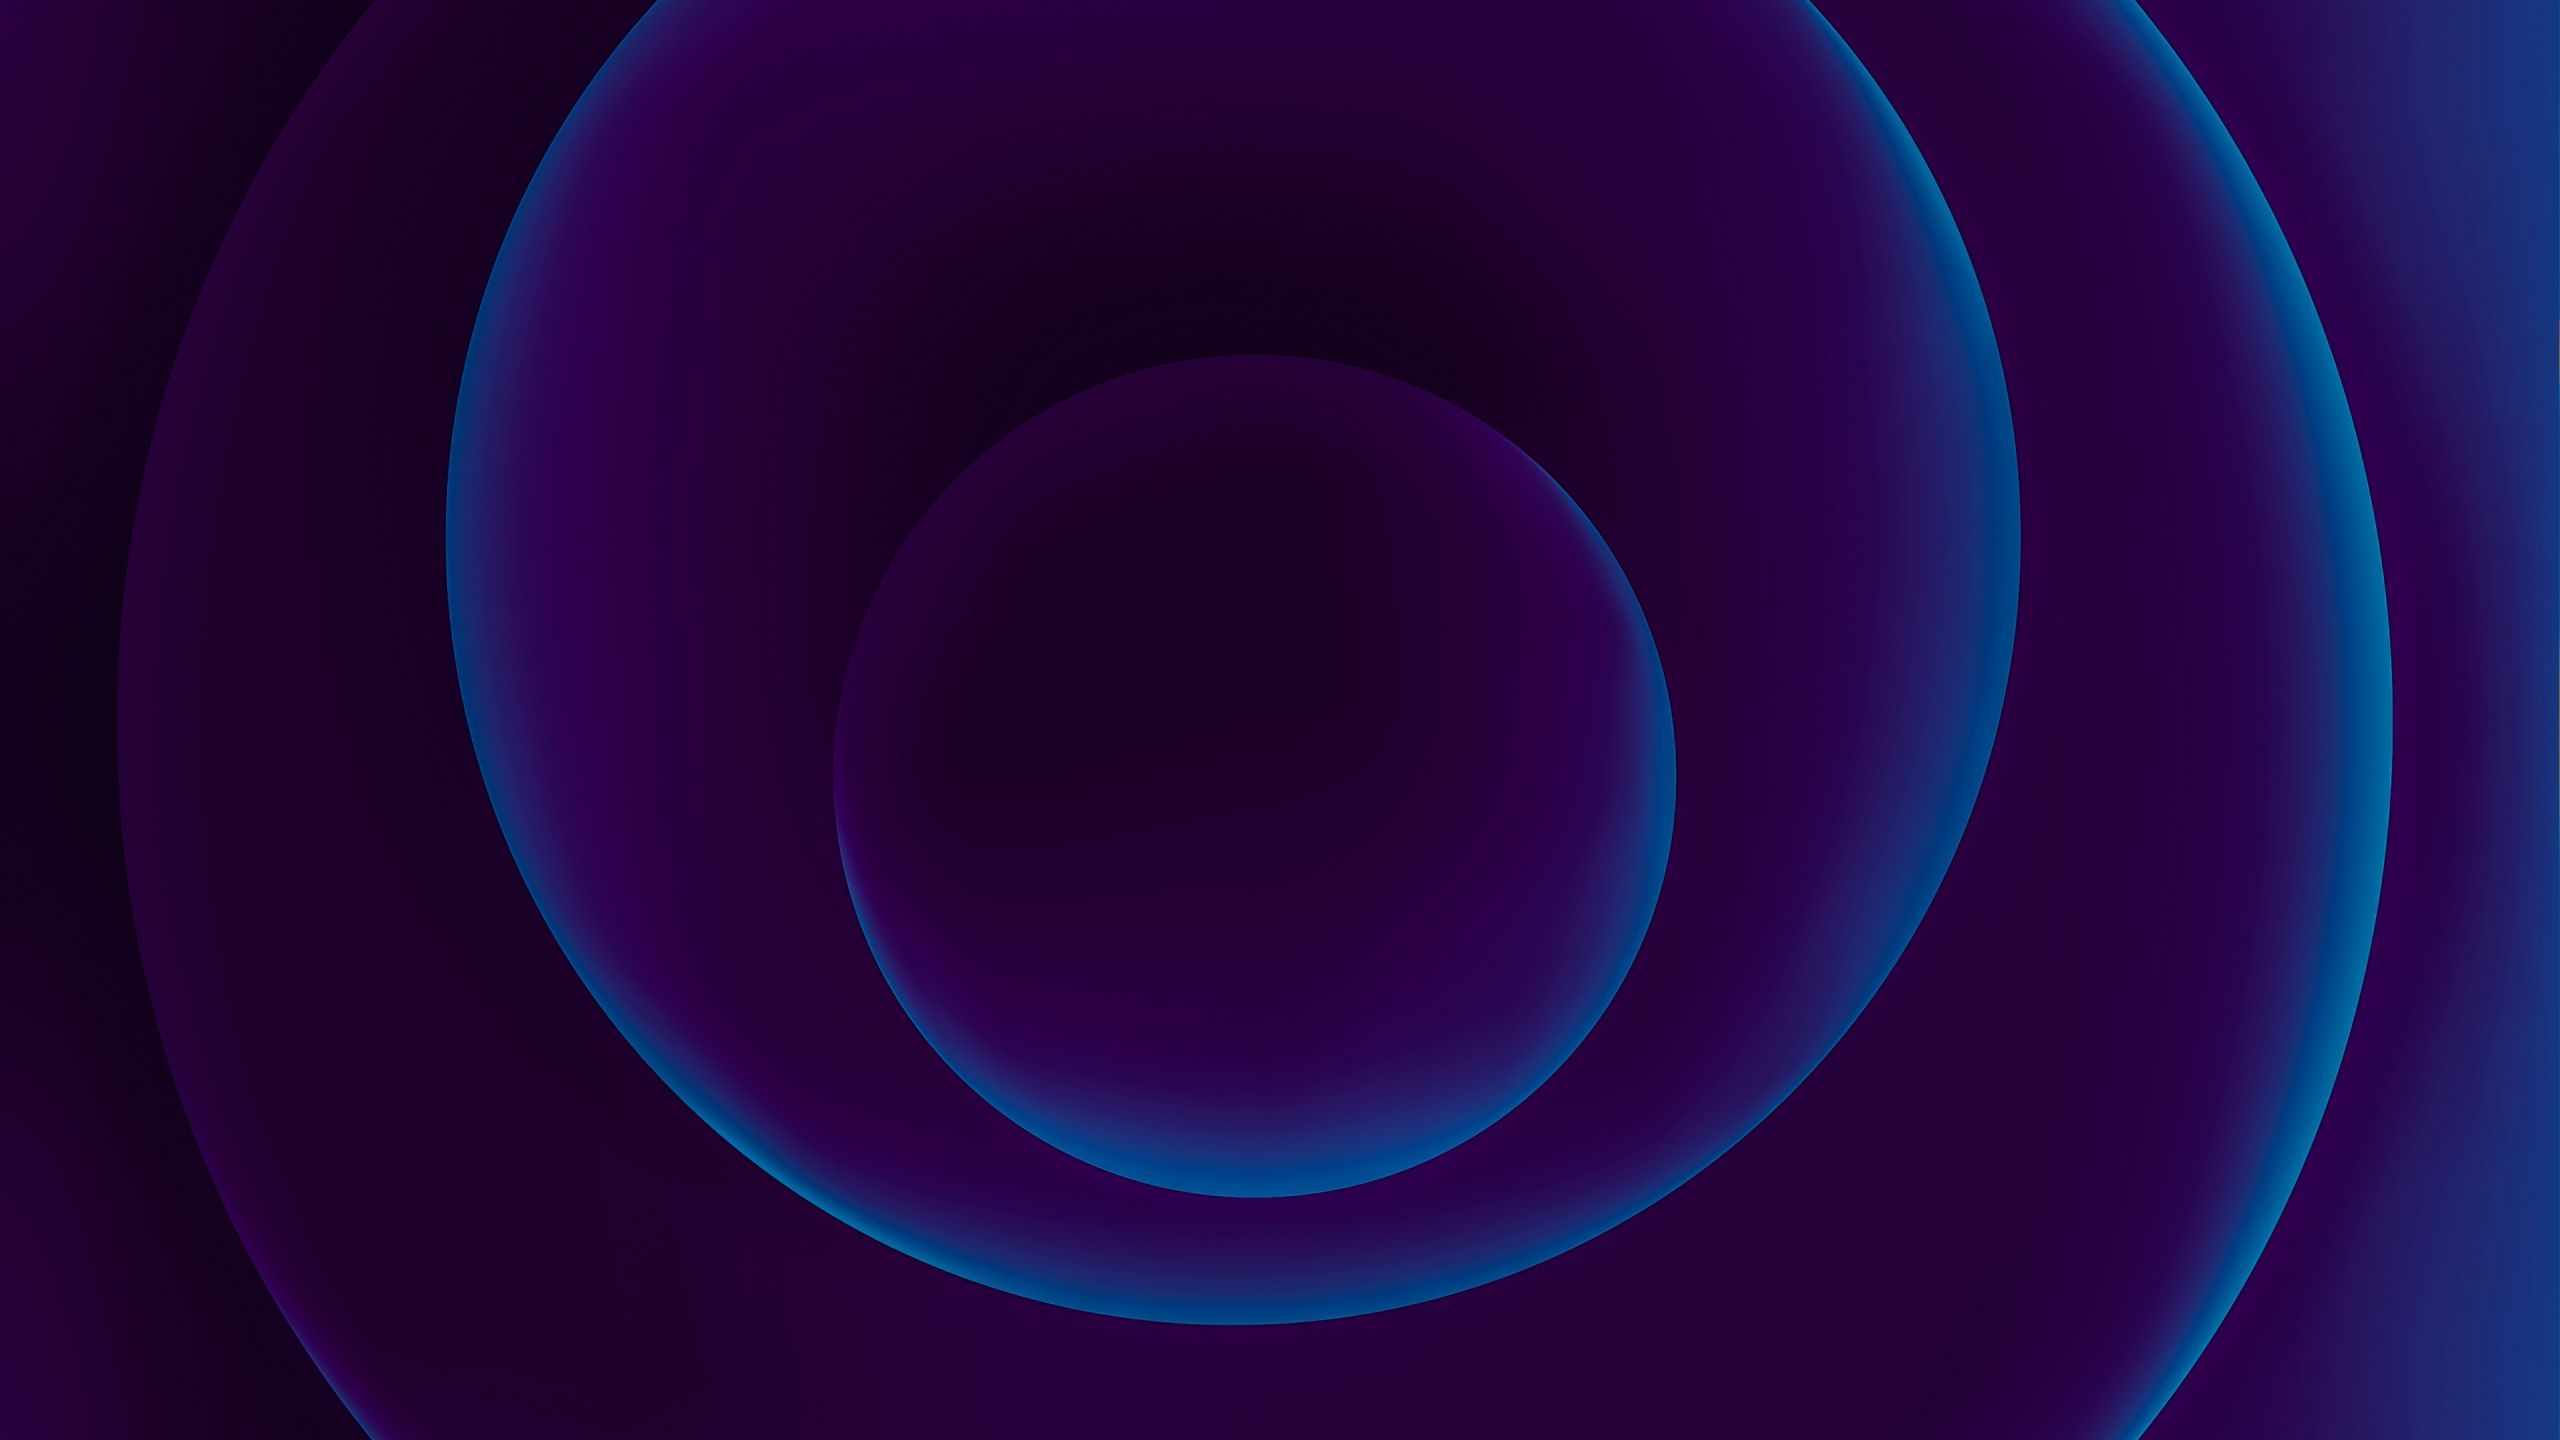 Download 2560x1440 Wallpaper Purple Balls Circles Iphone 12 2020 Dual Wide Widescreen 16 9 Widescreen 2560x1440 Hd Image Background 26533